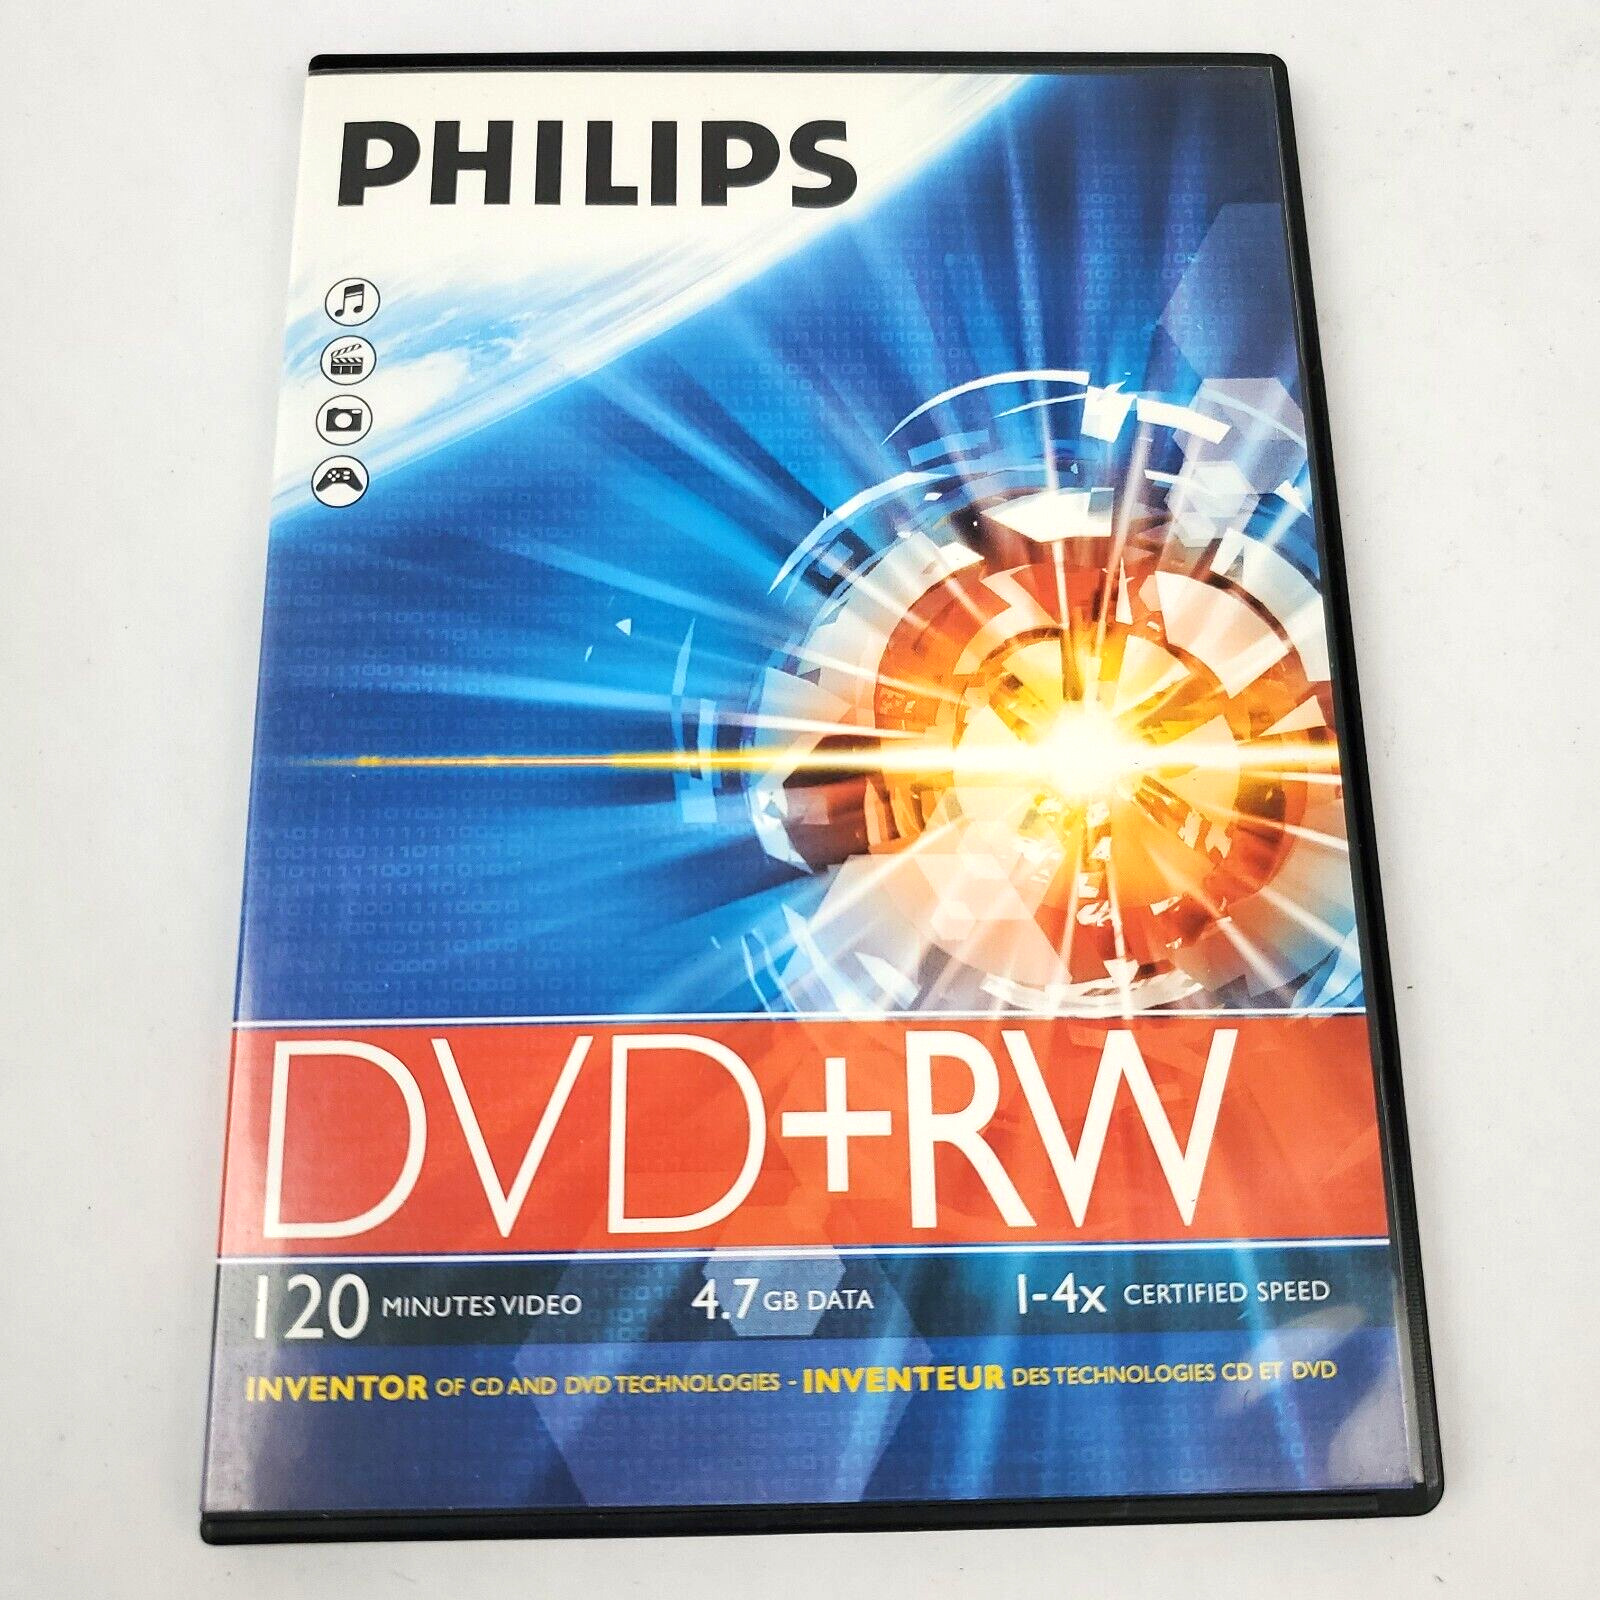 Philips DVD+RW 120 Min 4.7 GB 1-4x Certified Speed Brand New 